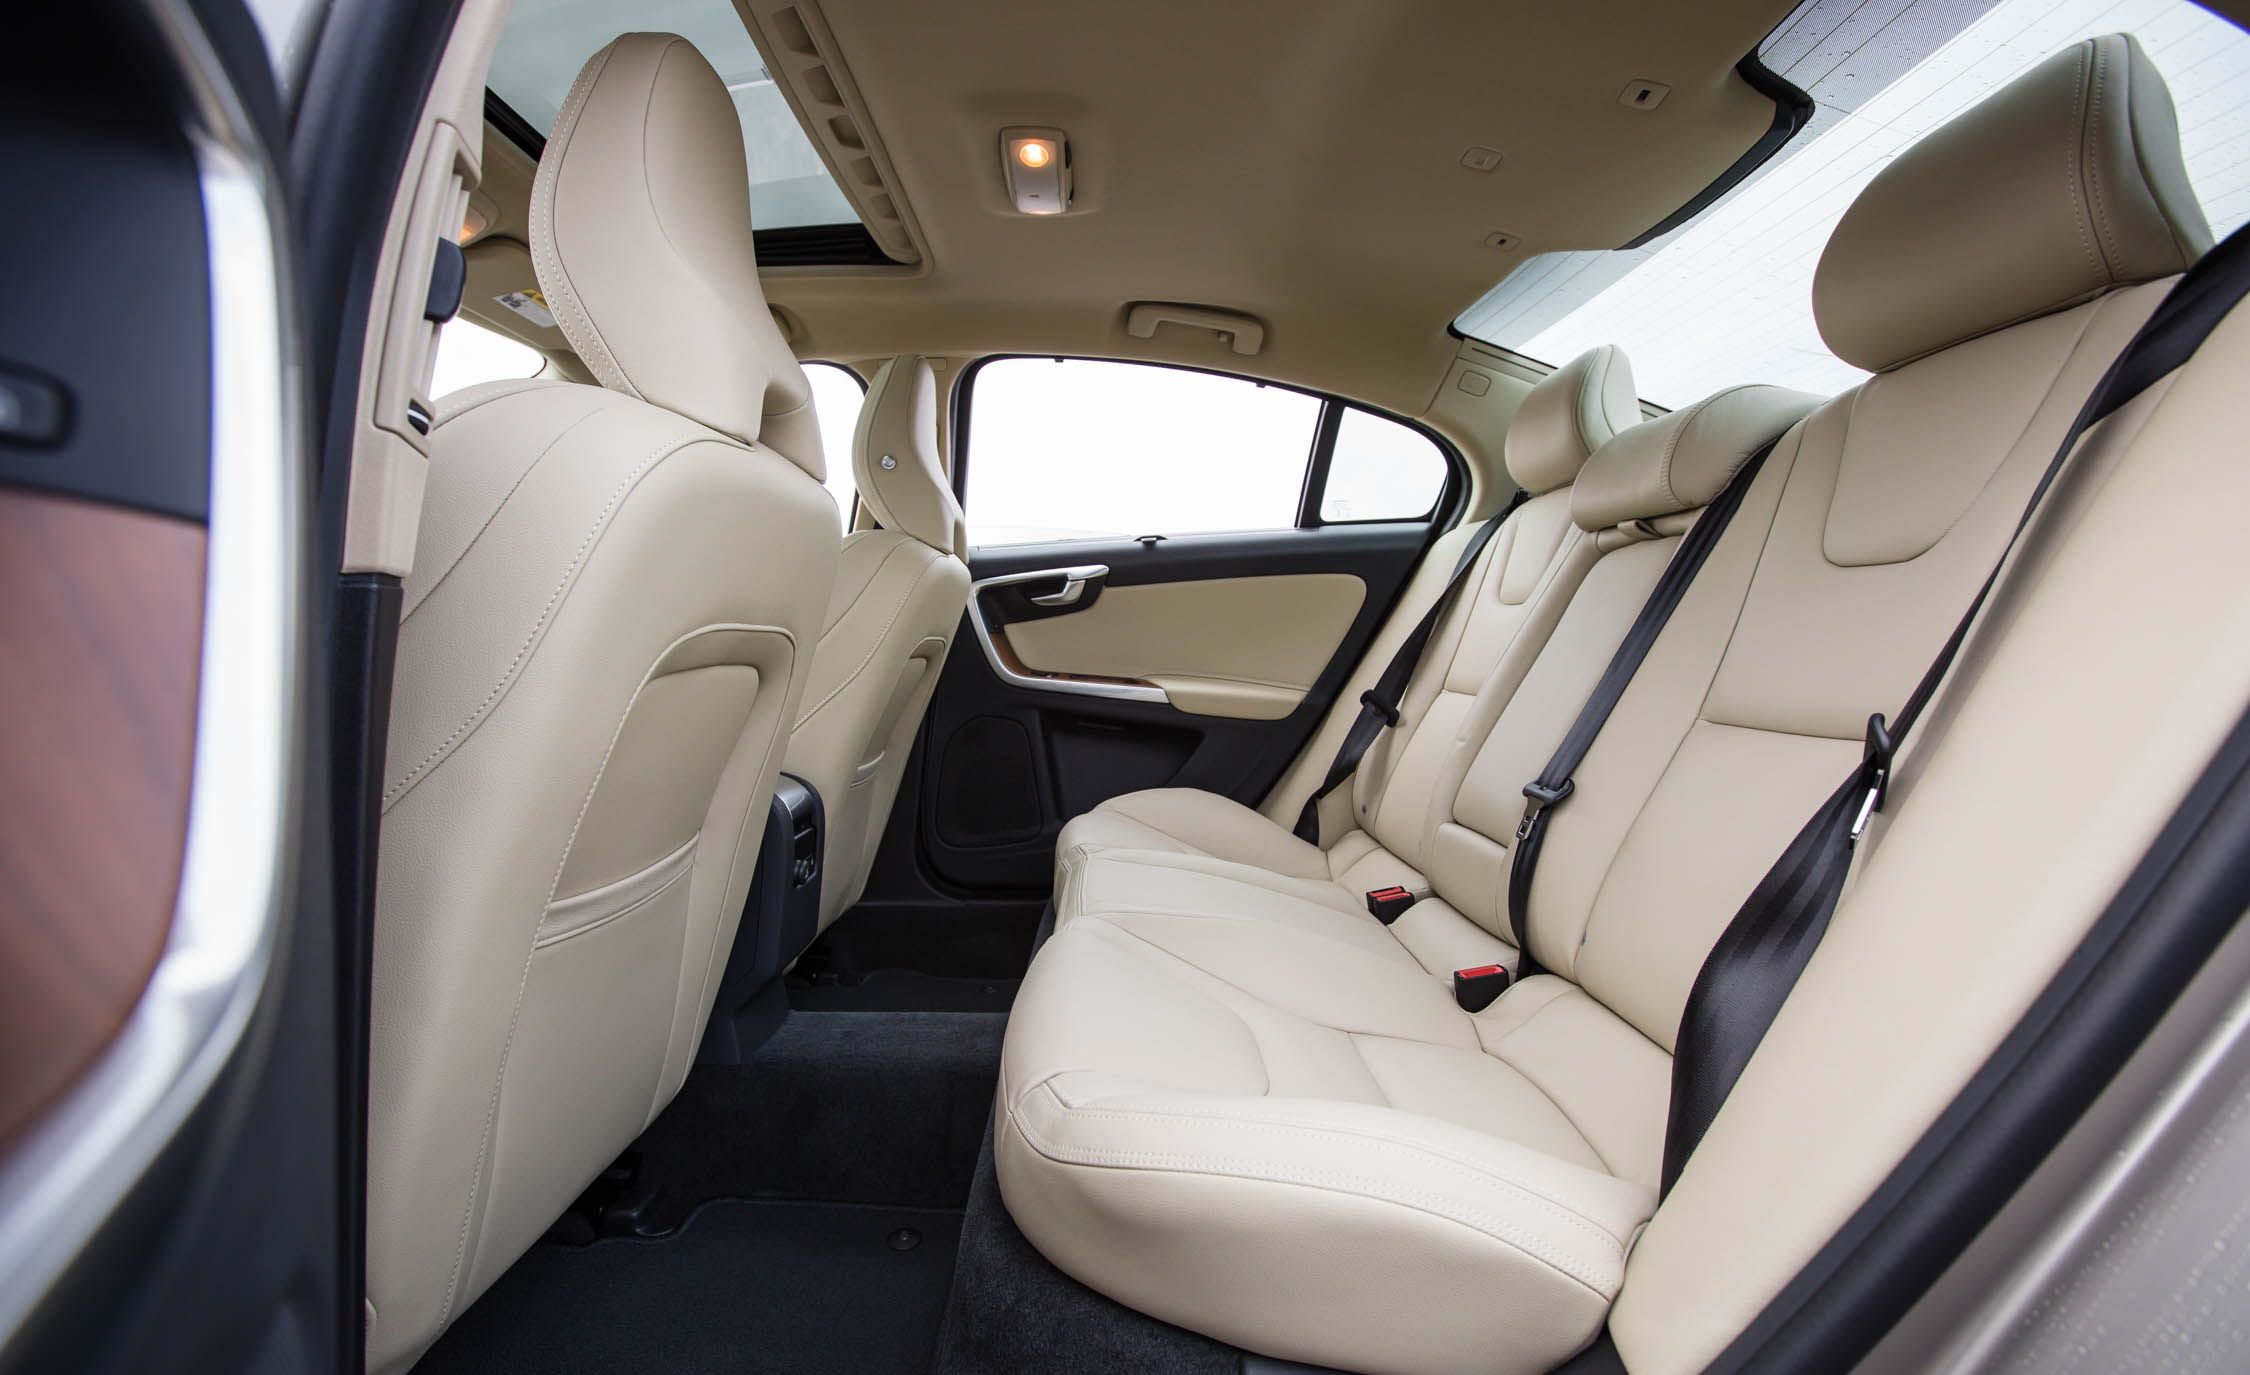 2016 Volvo S60 T5 Inscription Interior Rear Seats (View 4 of 28)